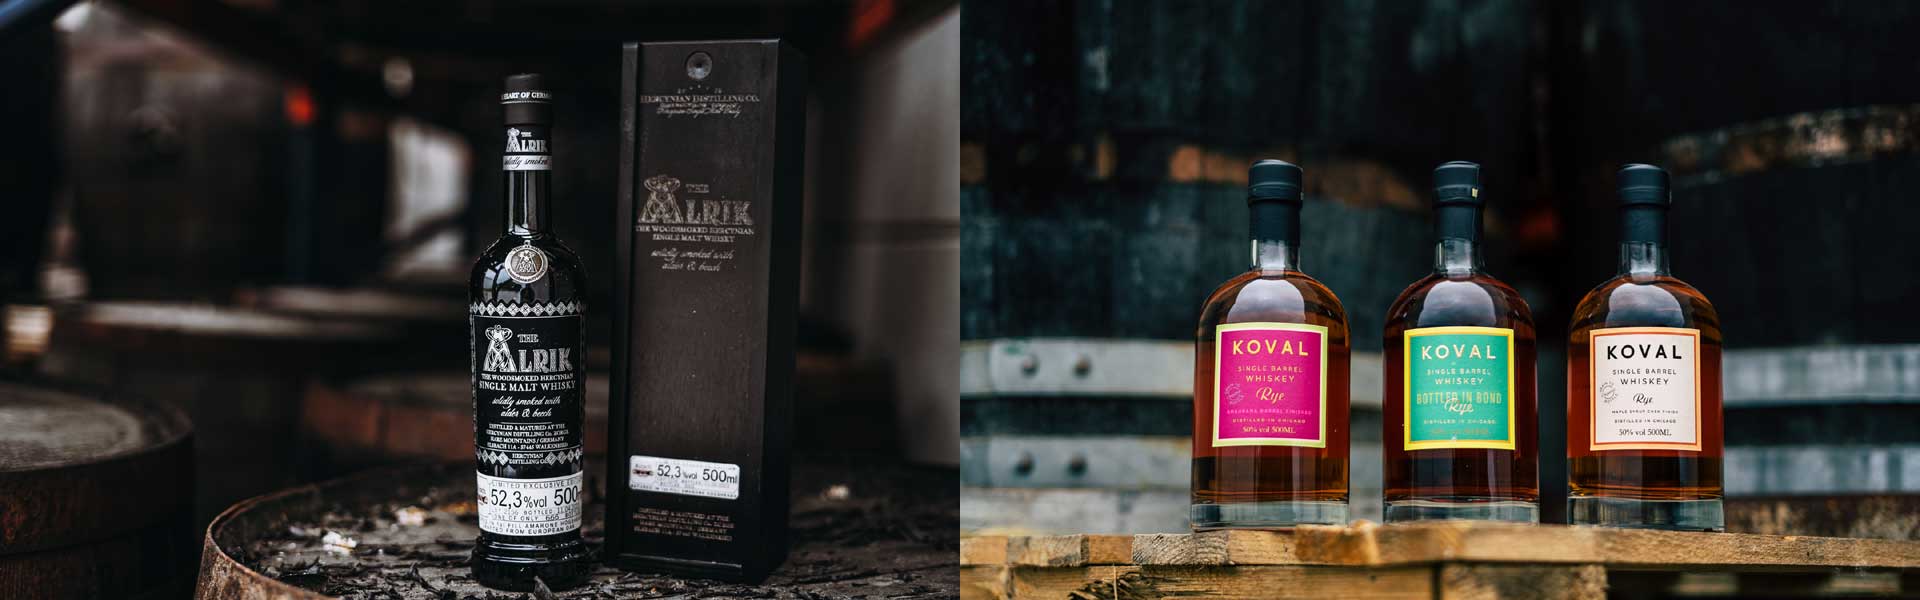 Neu bei Kirsch Import: The Alrik Amarone Cask und Koval Single Barrel Rye Whiskey